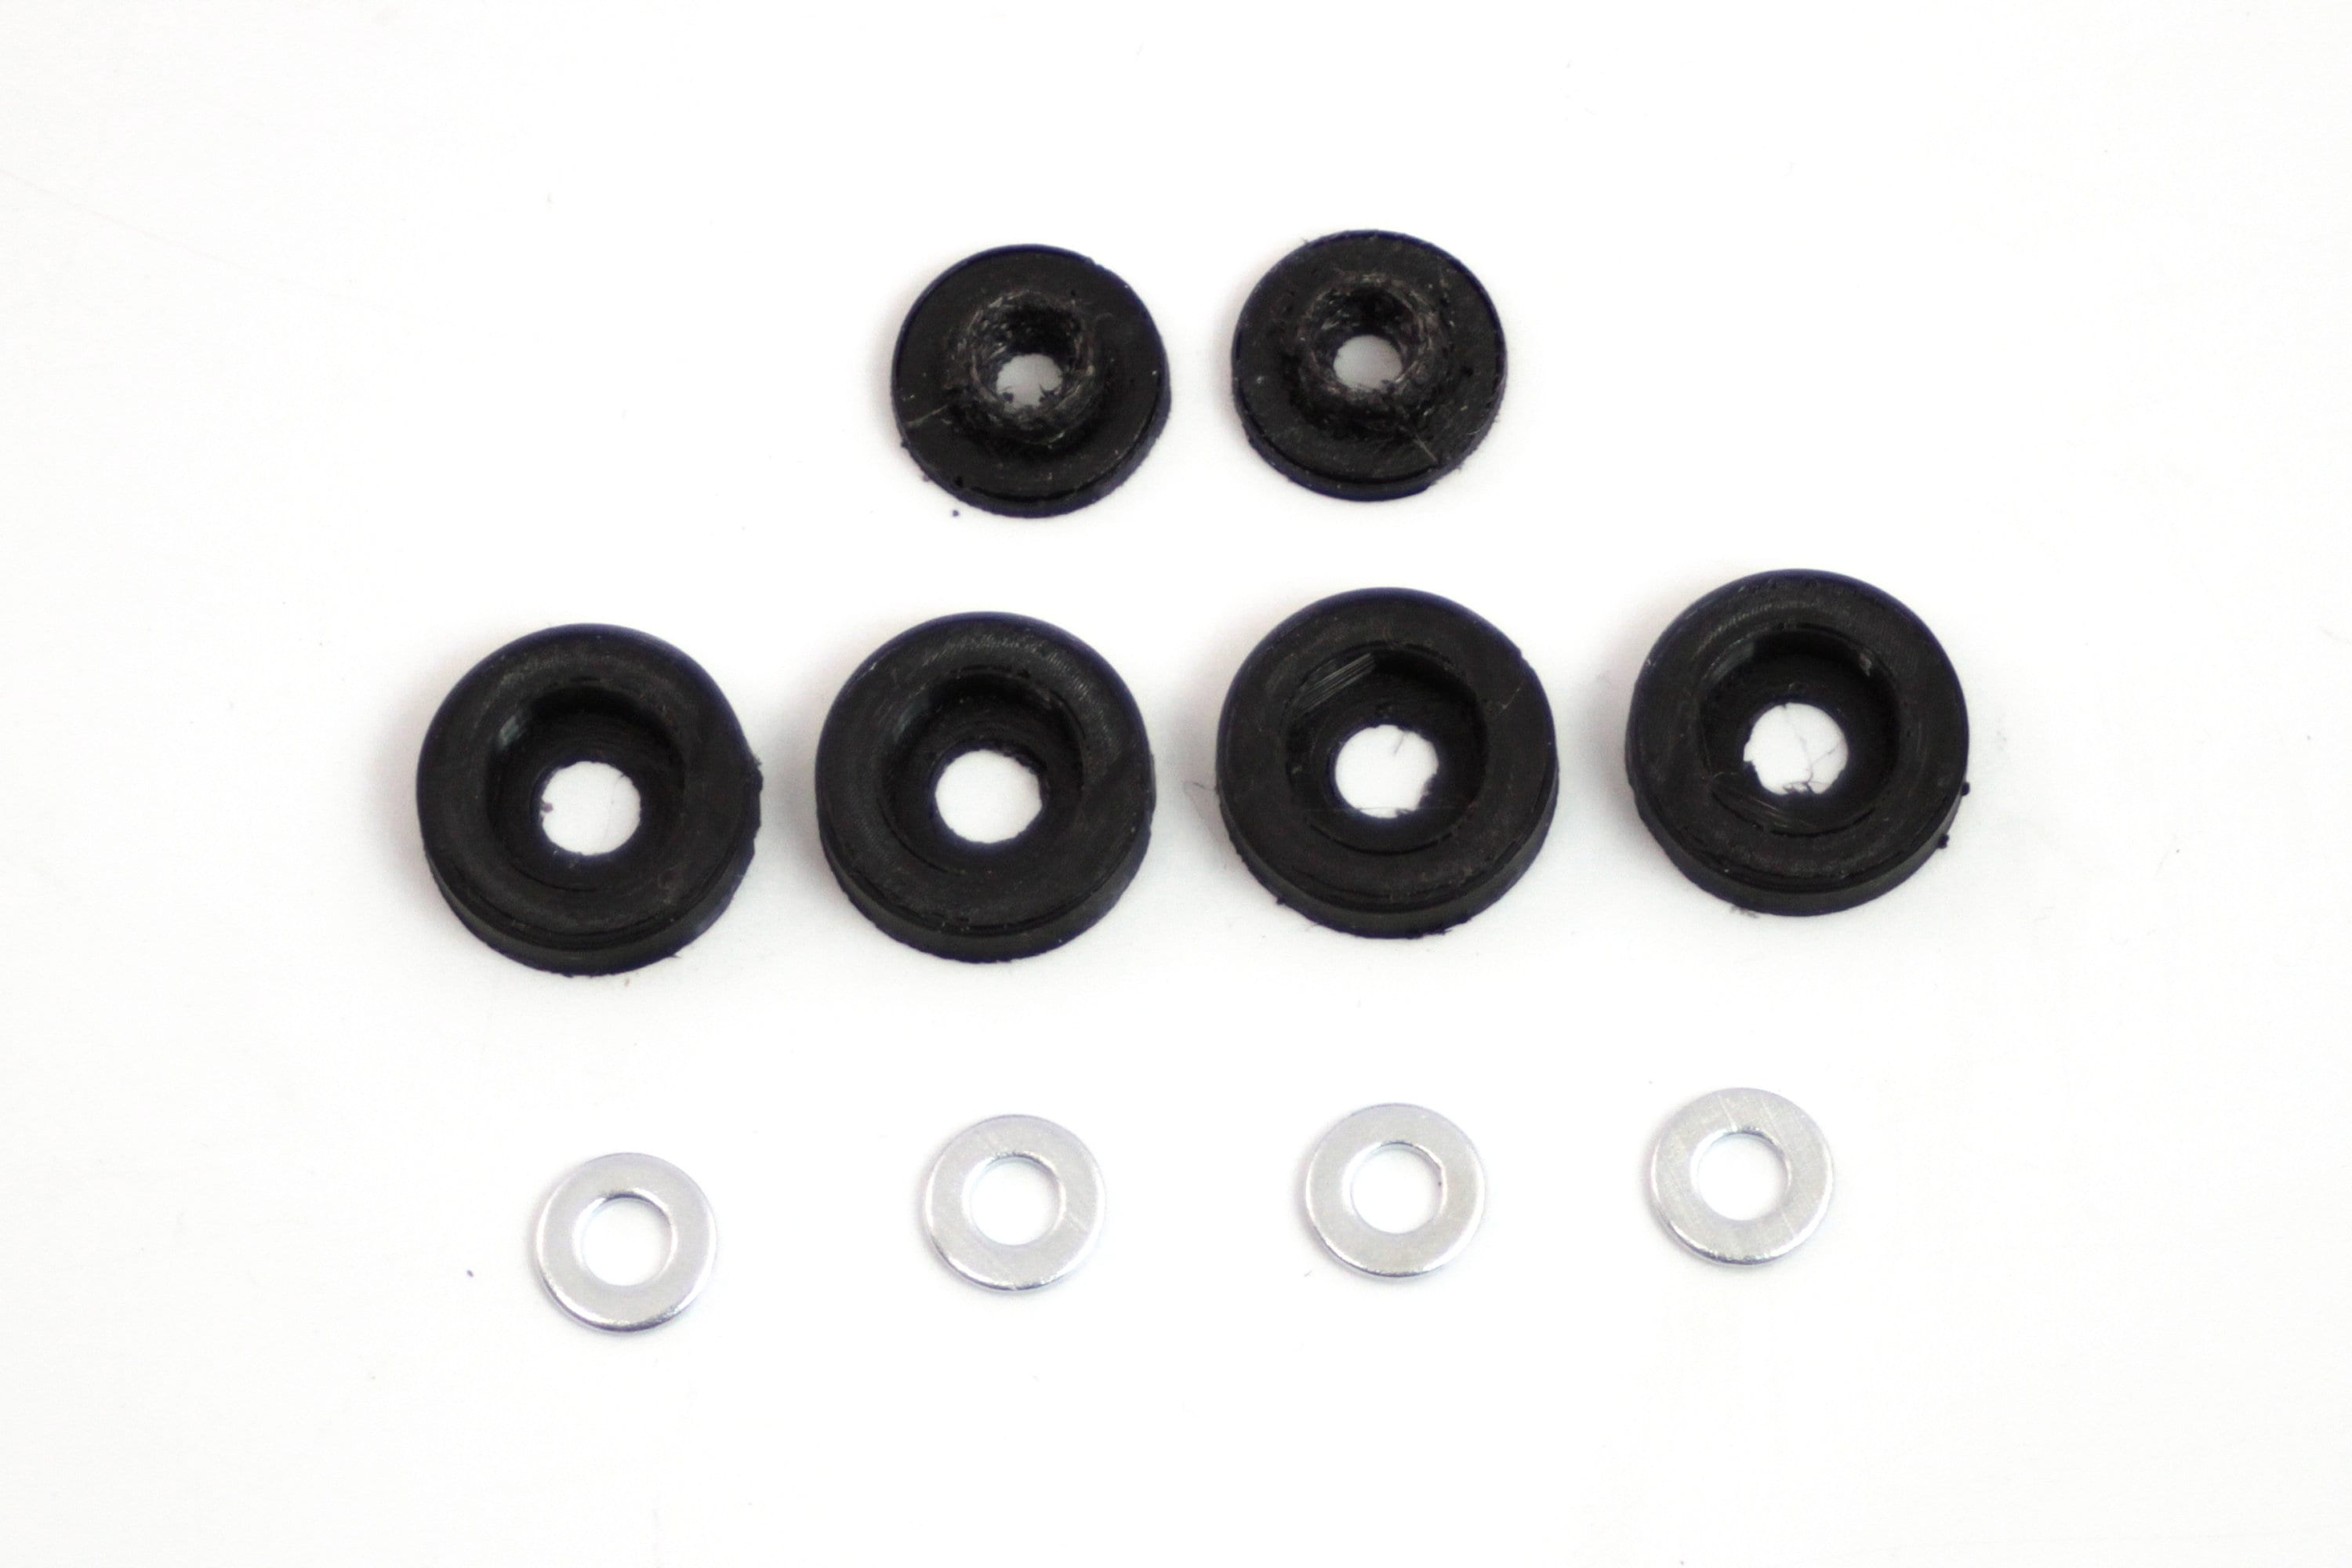 Grommet Kit, 450 Pcs, Assortment of Blank and Open Grommets in Storage  Case, PVC, Black